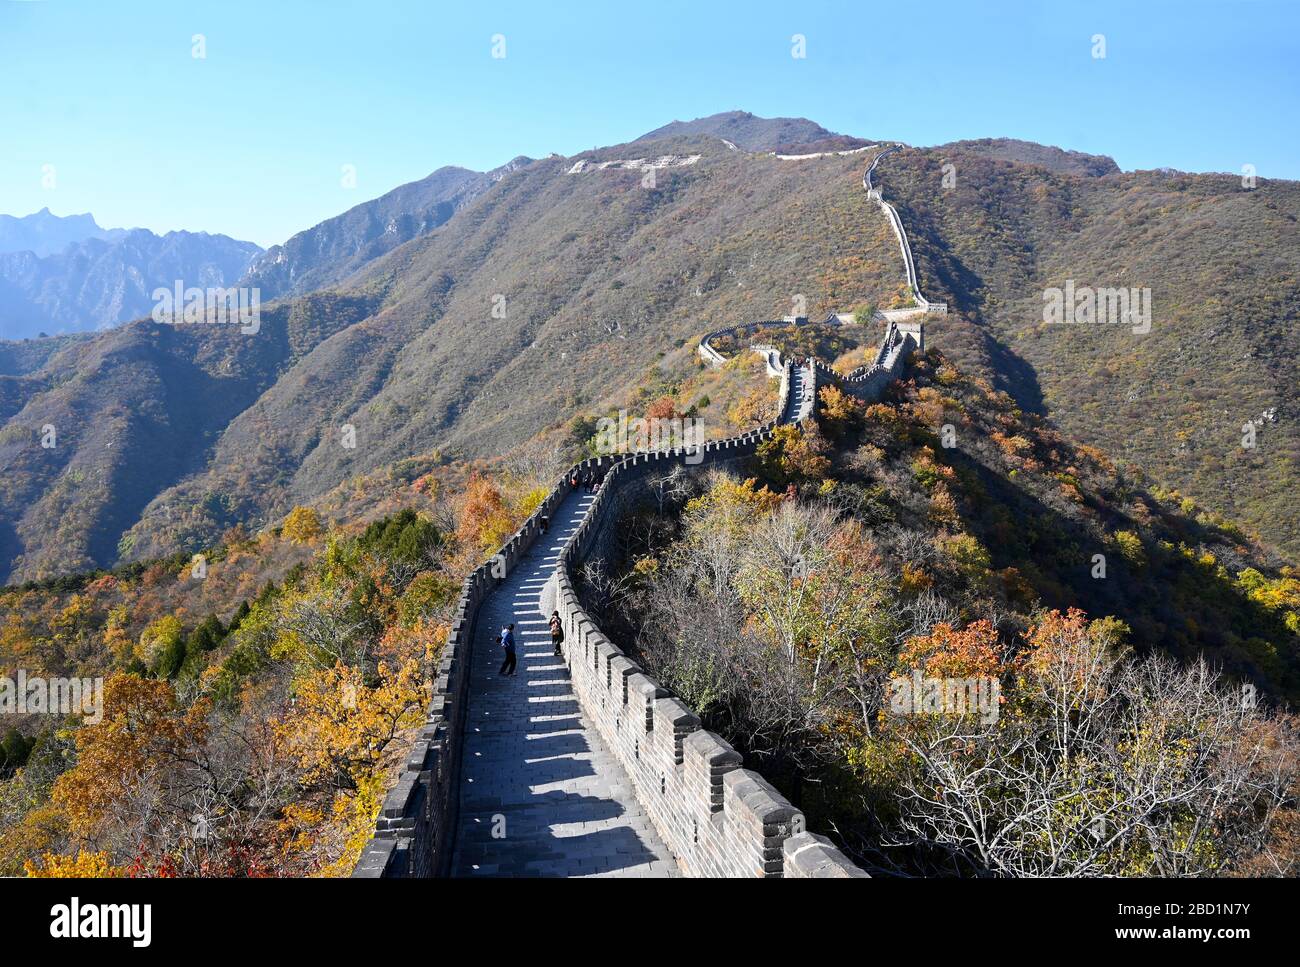 Chinesische Mauer, Mutianyu-Abschnitt, Blick nach Westen in Richtung Jiankou, UNESCO-Weltkulturerbe, Peking, China, Asien Stockfoto